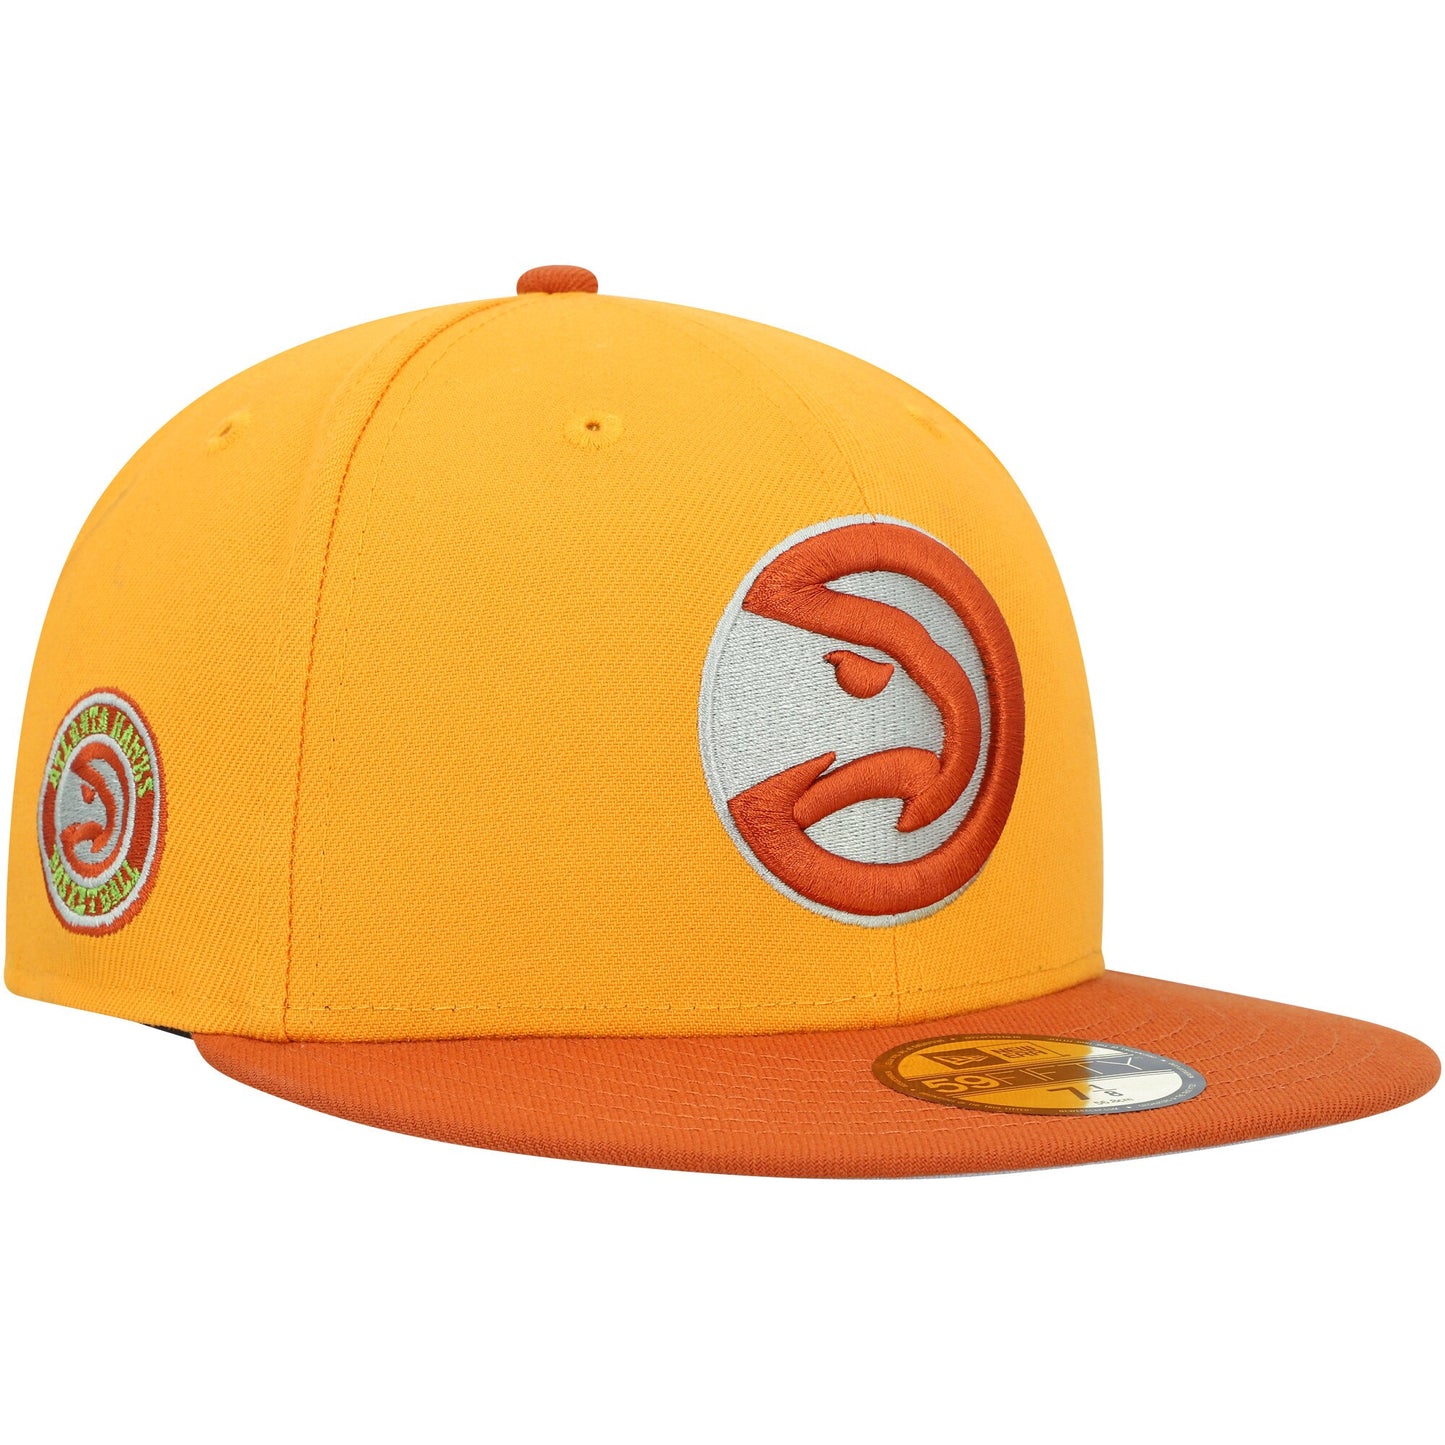 Atlanta Hawks New Era 59FIFTY Fitted Hat - Gold/Rust